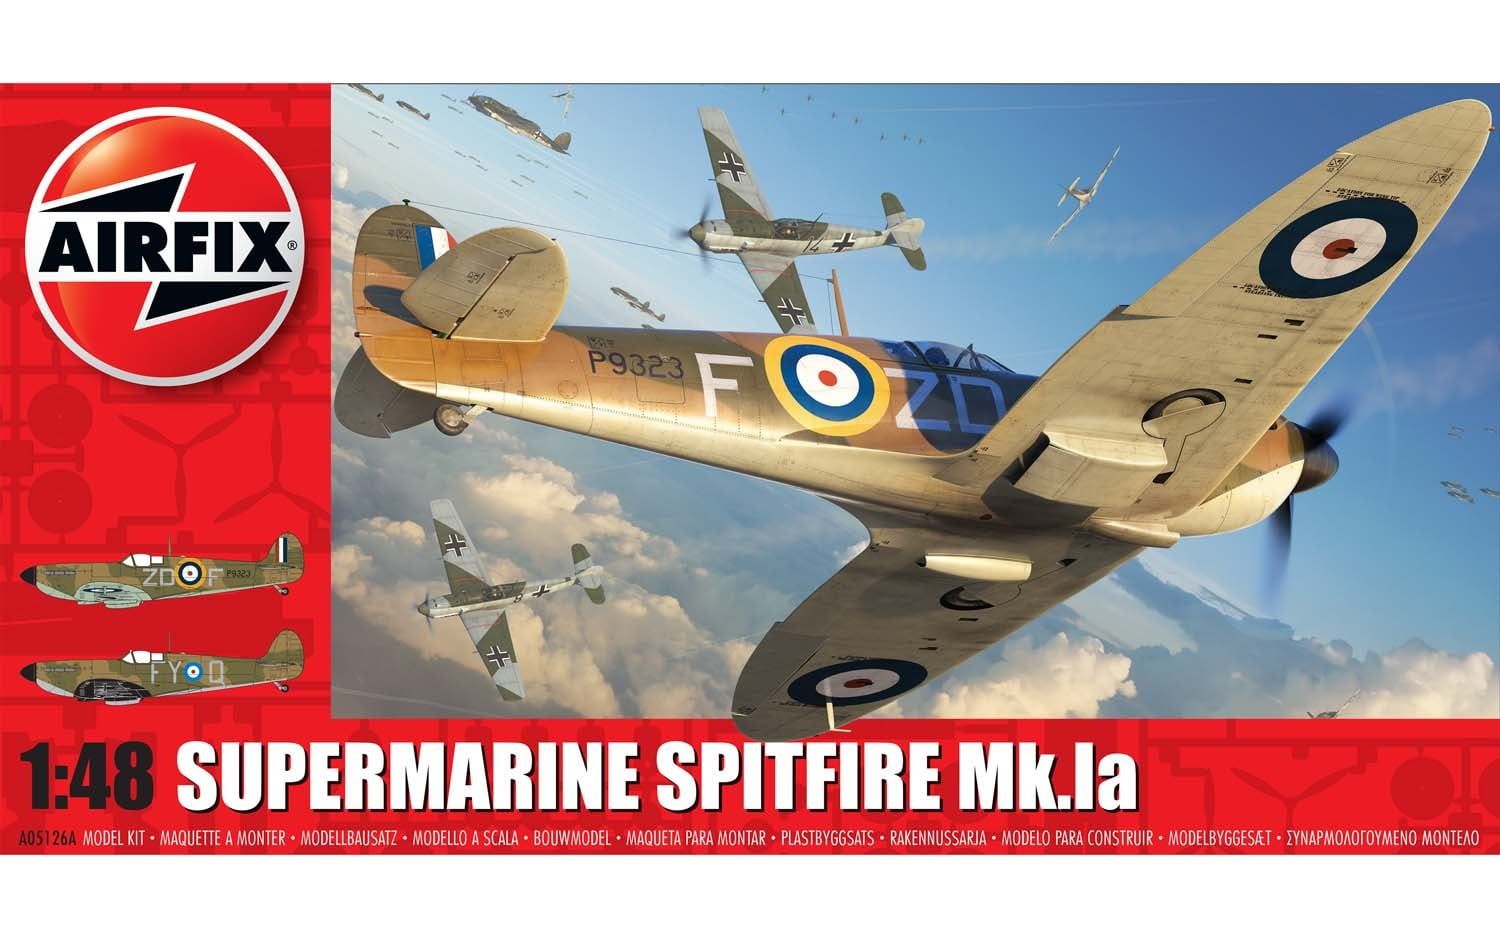 Airfix 1/48 Scale Supermarine Spitfire Mk.1a Model Kit